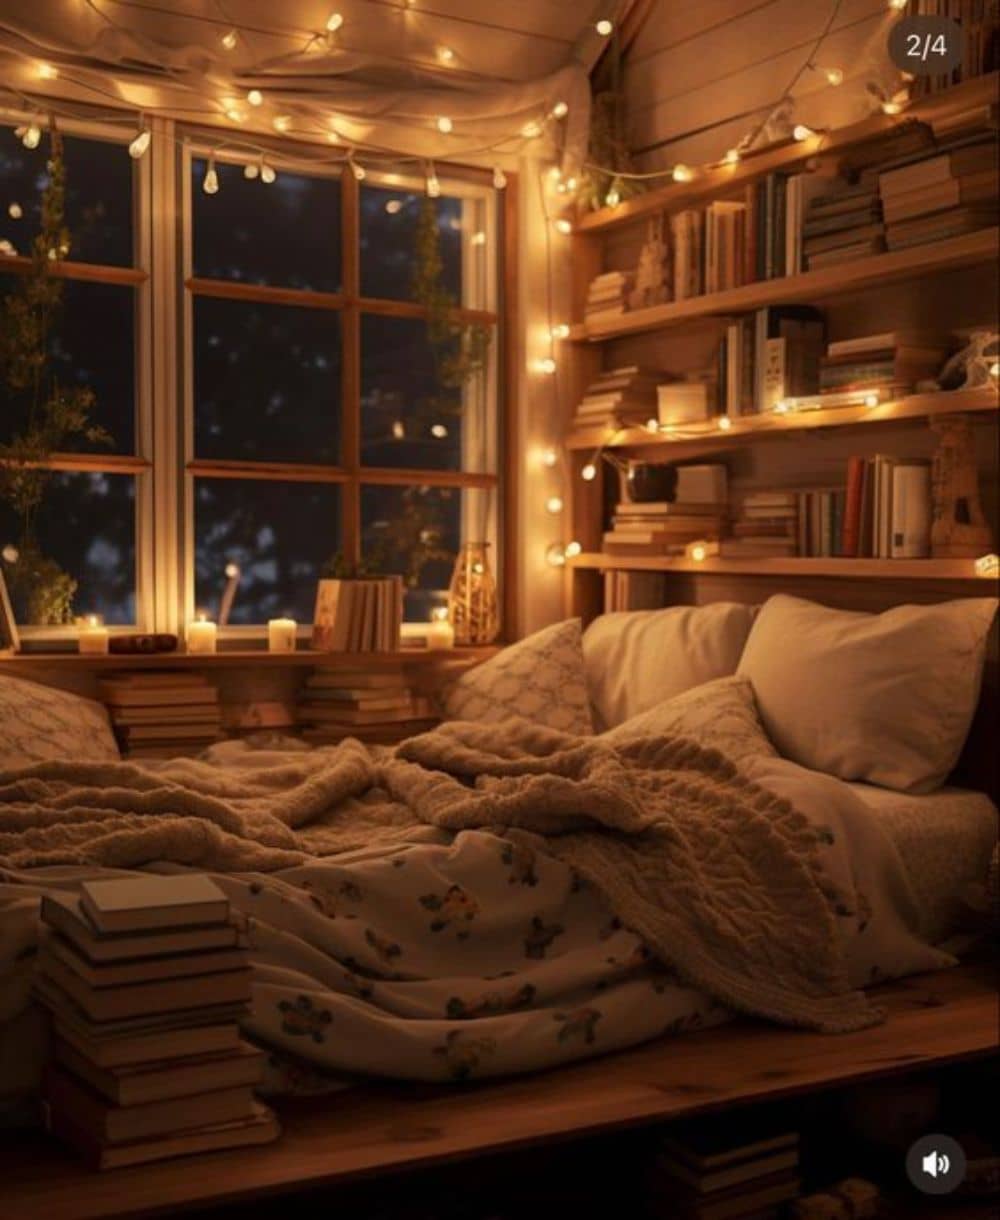 Cozy bedroom nook idea with dim lighting and a bookshelf